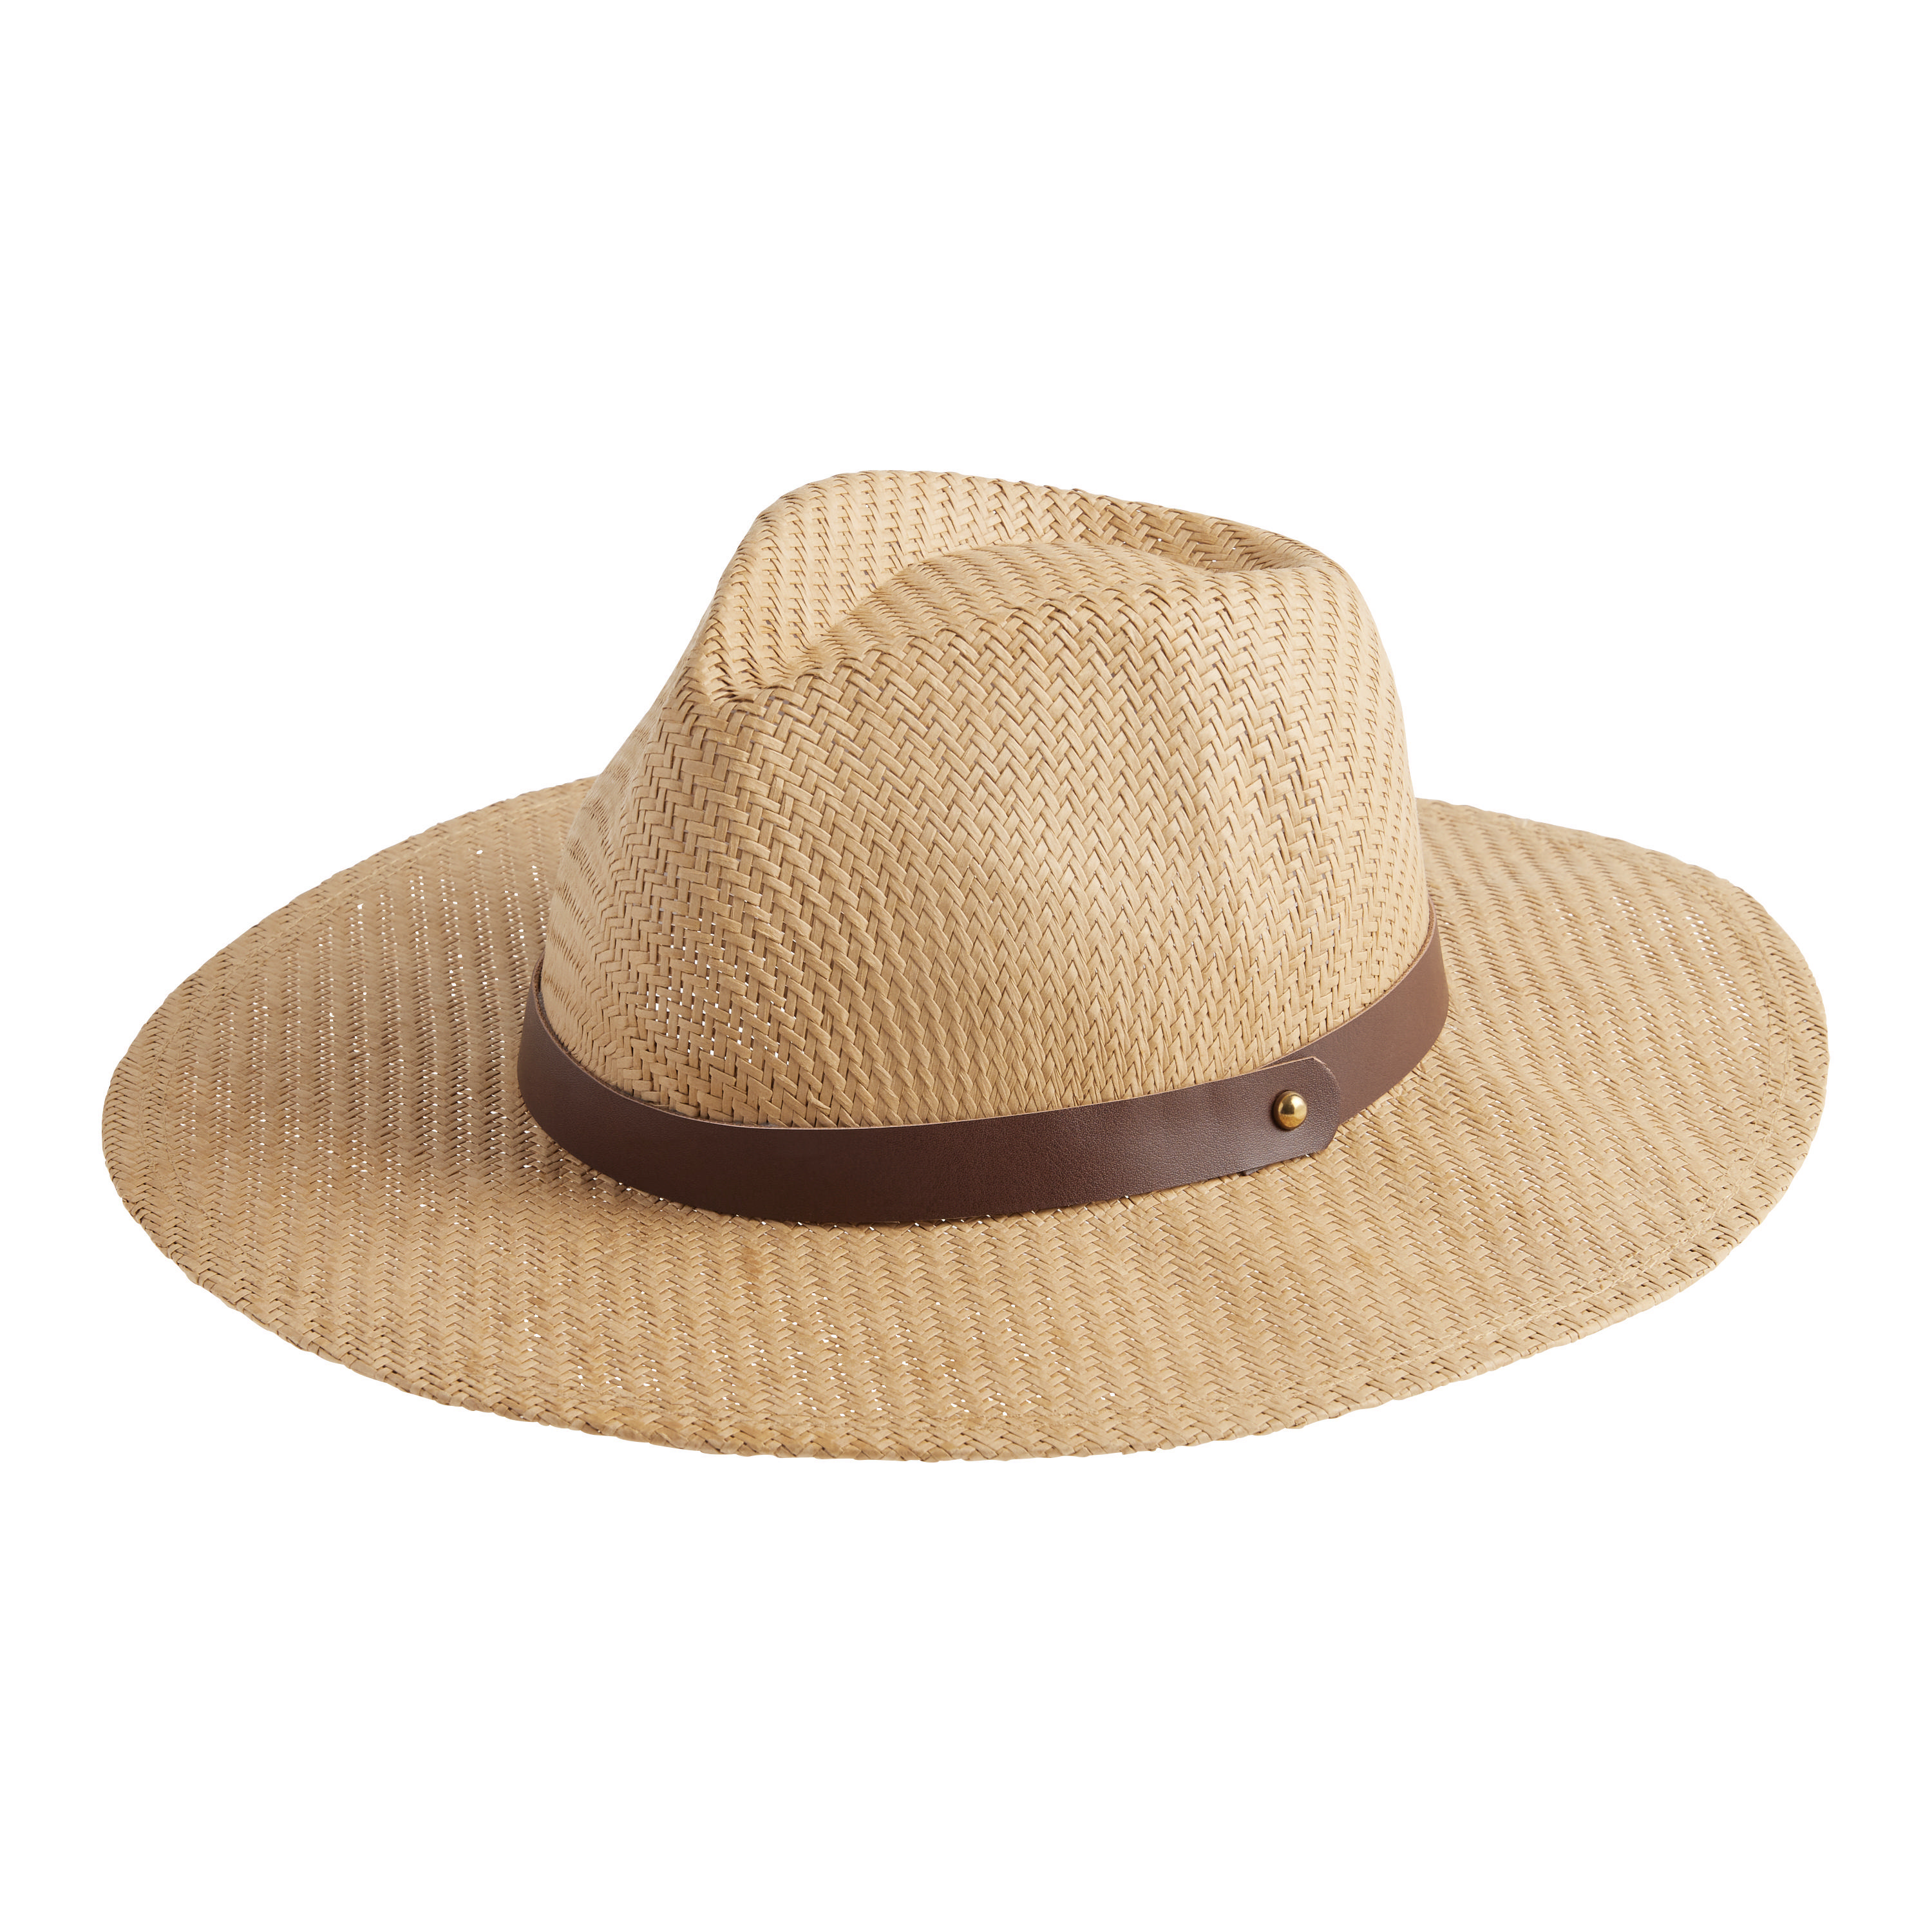 Sayulita Tan Straw Rancher Hat with Faux Leather Trim - World Market